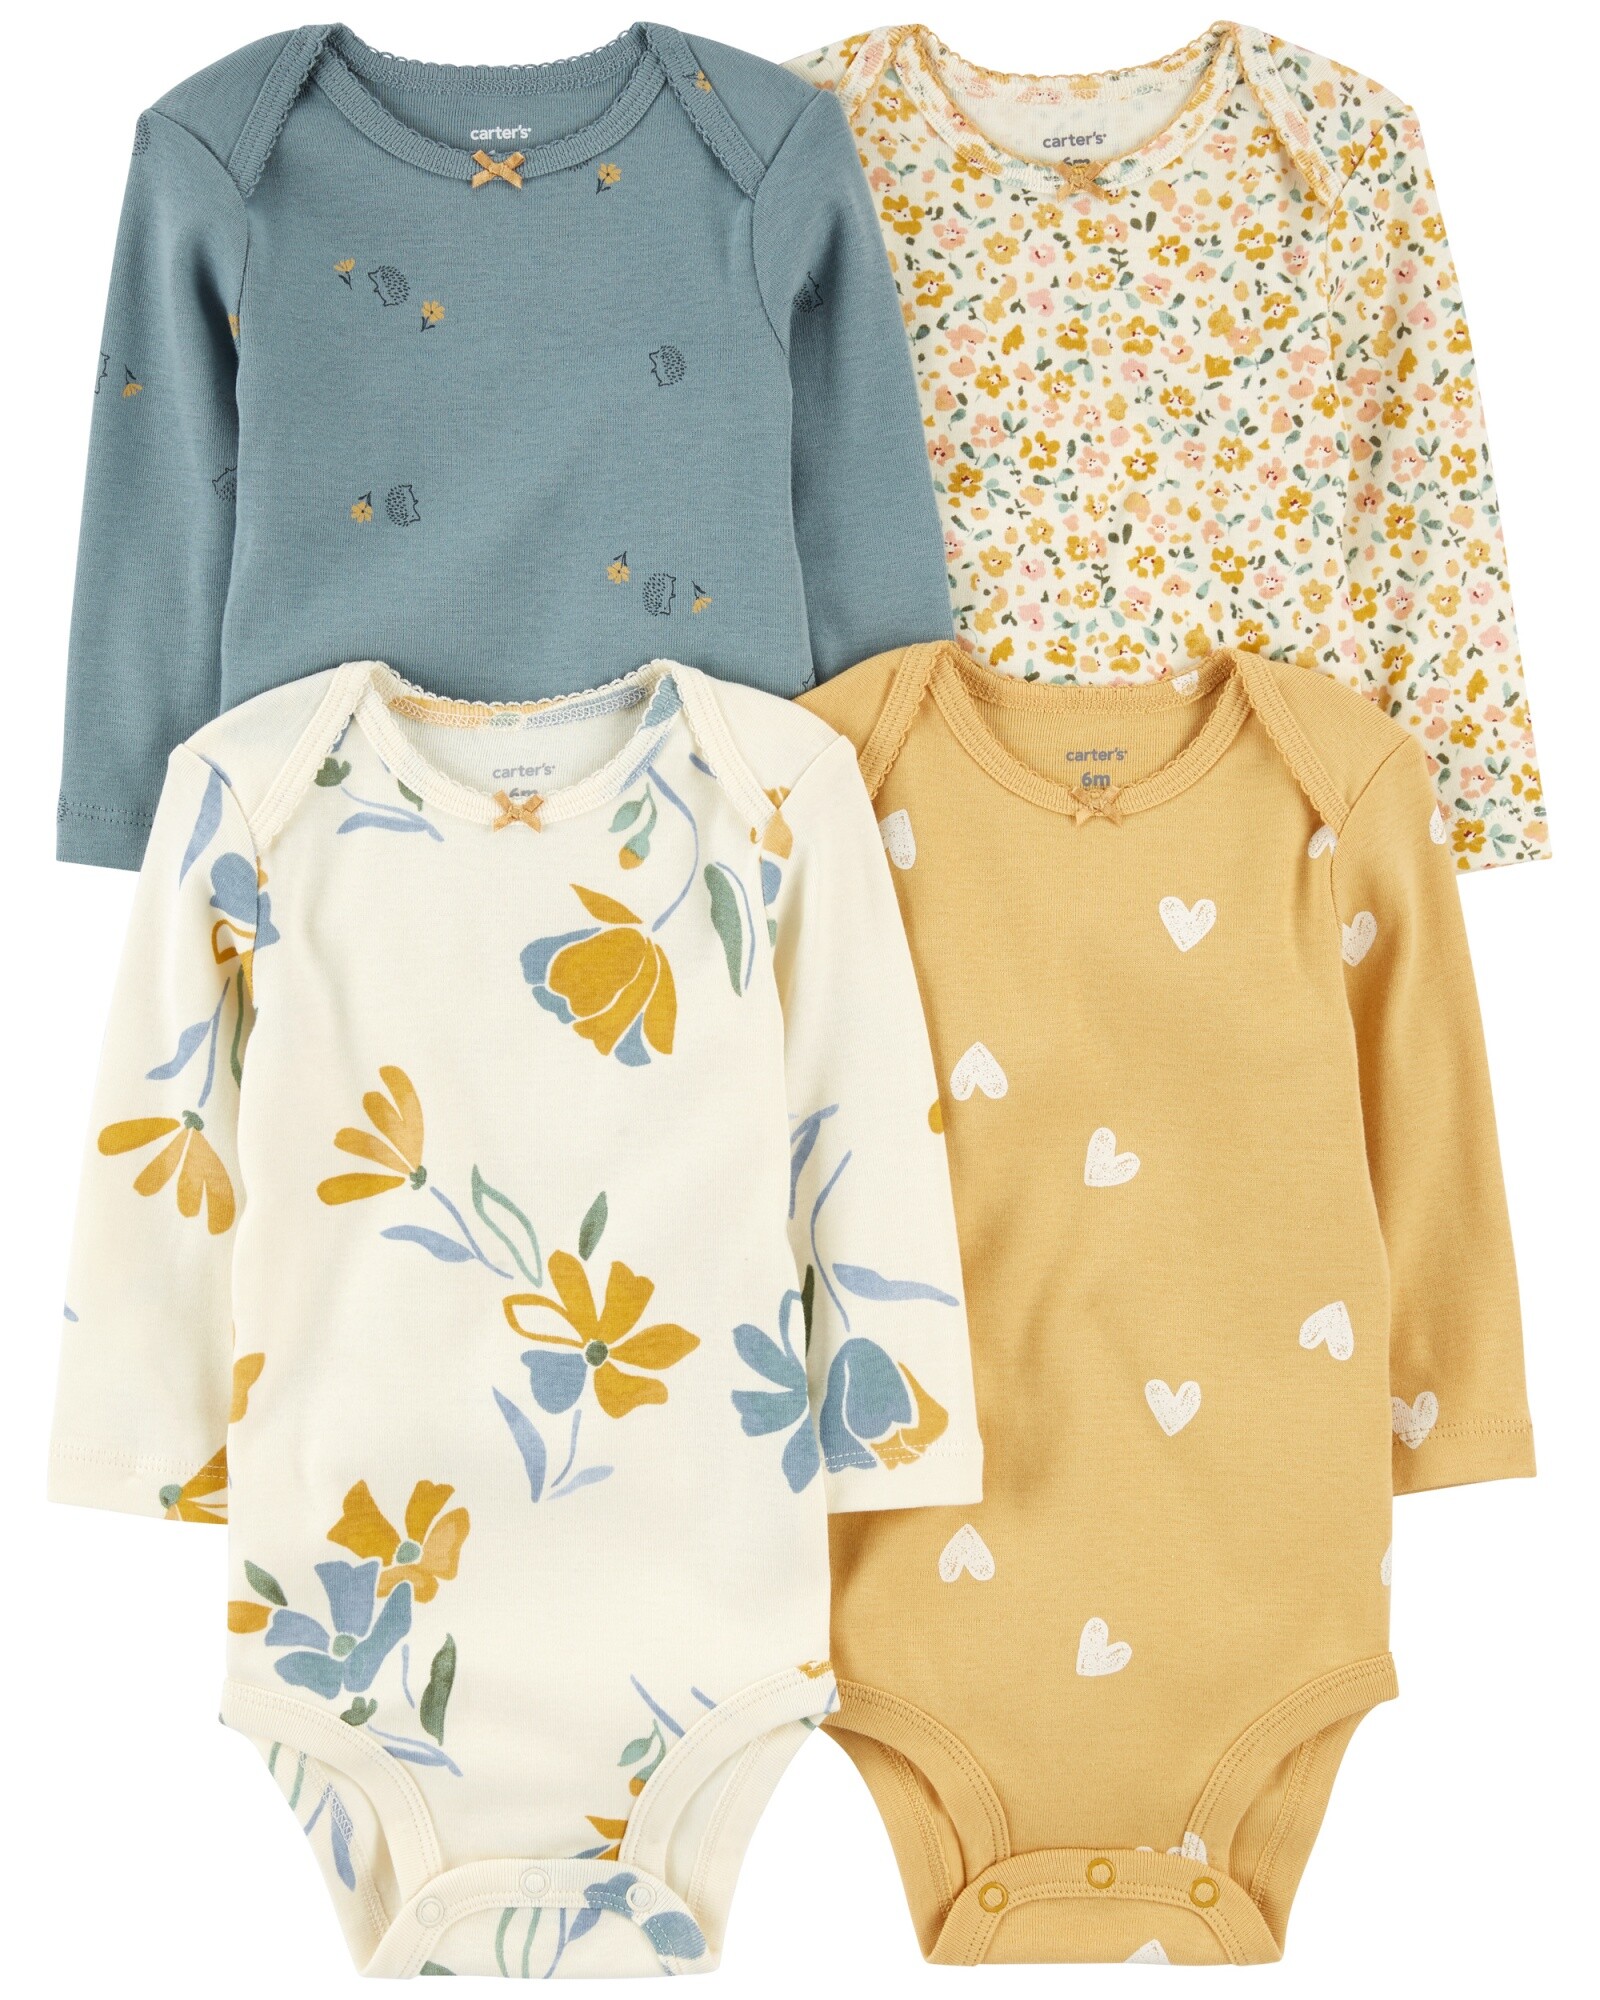 Pack cuatro bodies de algodón, manga larga, diseño floral Sin color